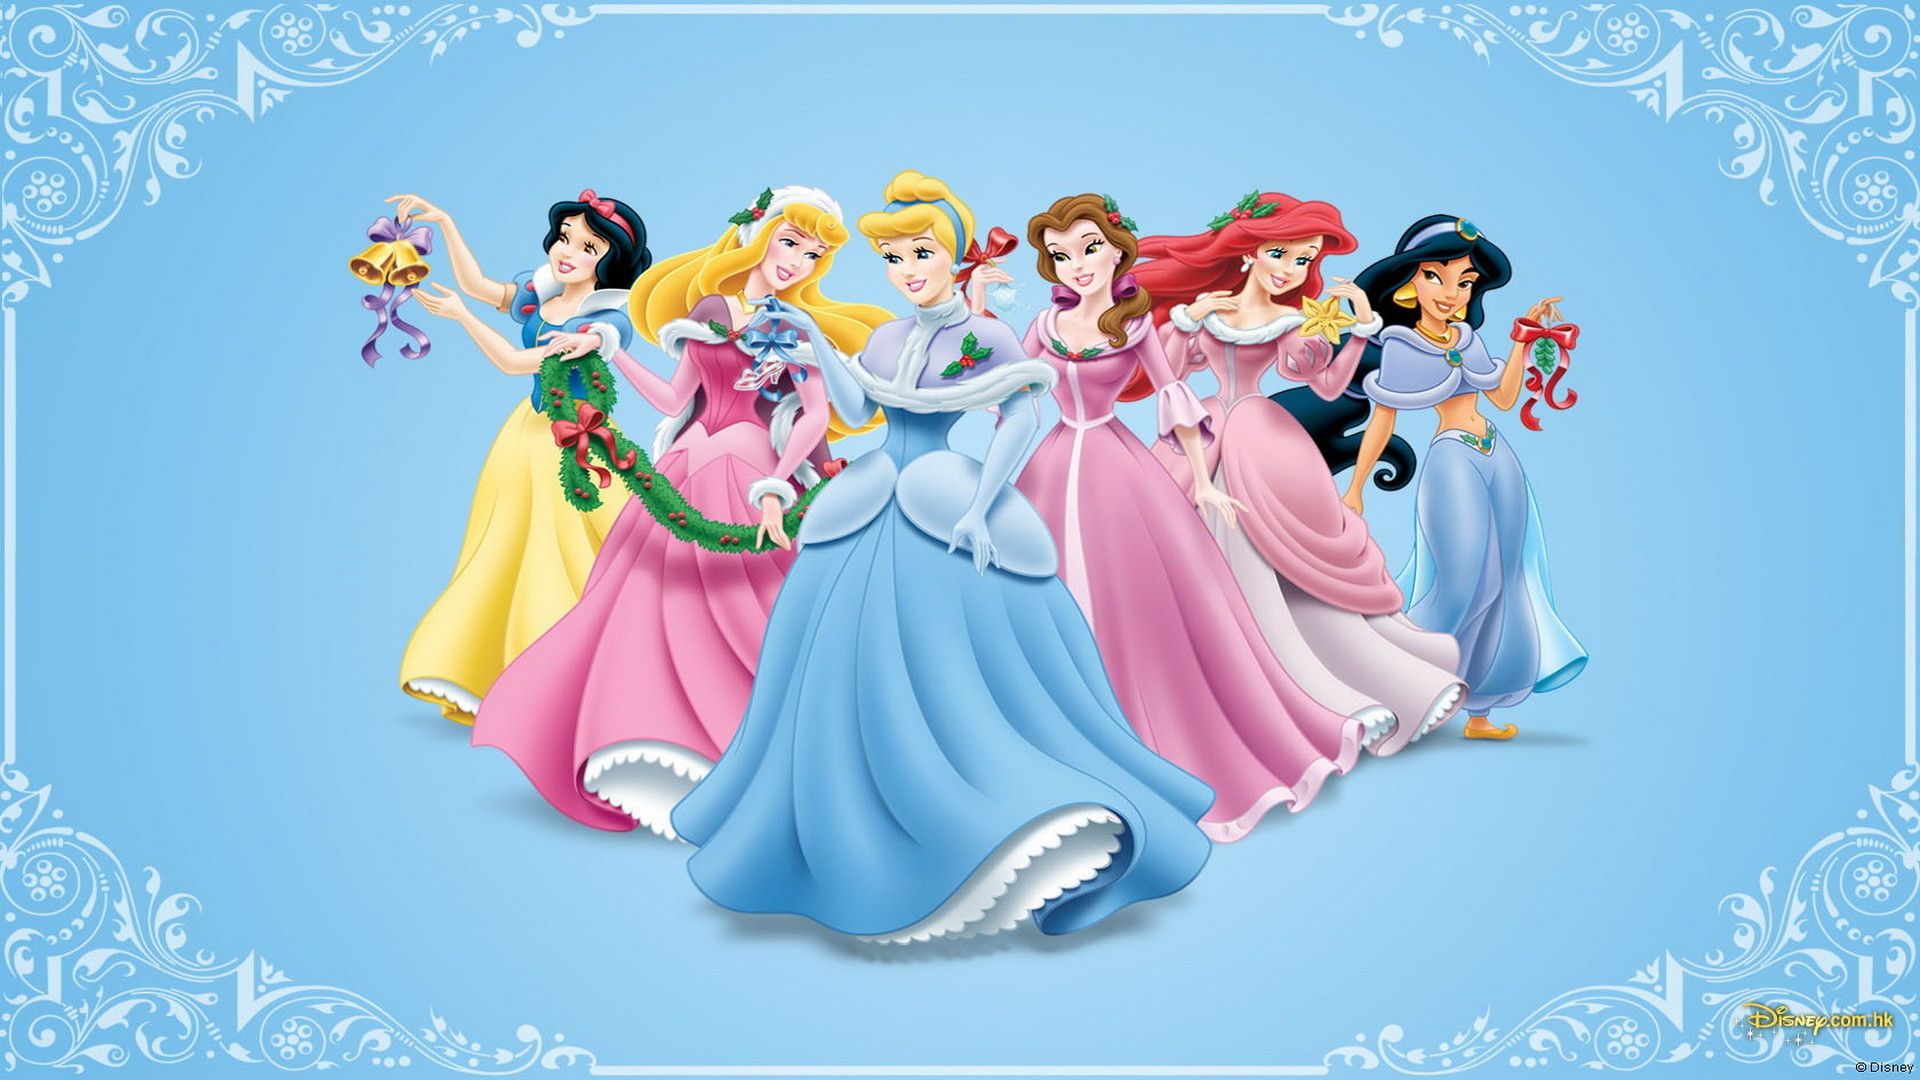 Noche Contar caravana Fondos de pantalla de princesas Disney - FondosMil